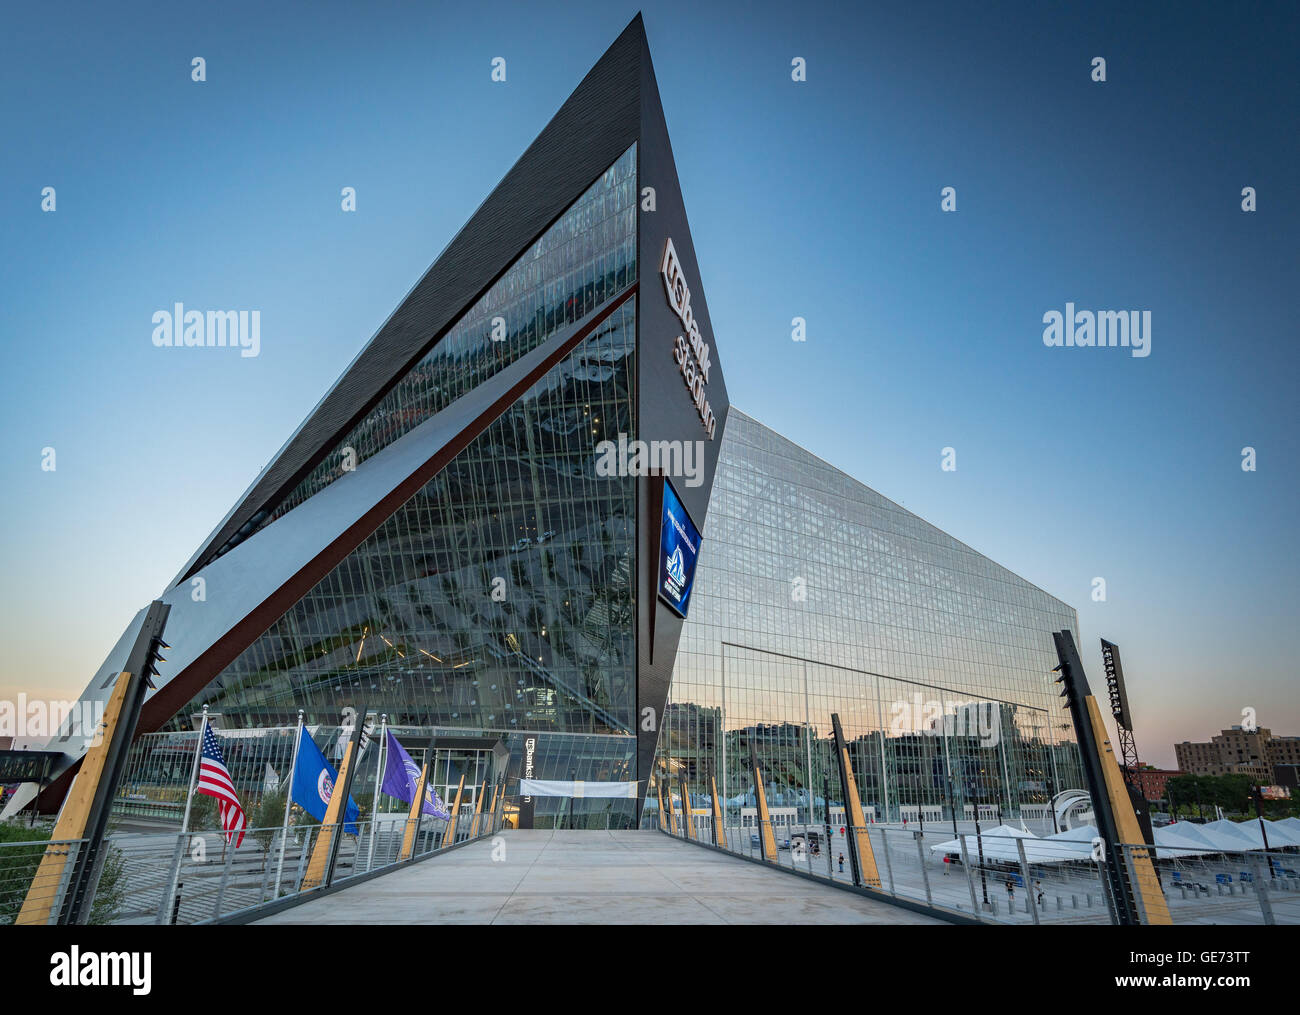 US Bank Stadium - Minnesota Vikings - Minneapolis Stock Photo